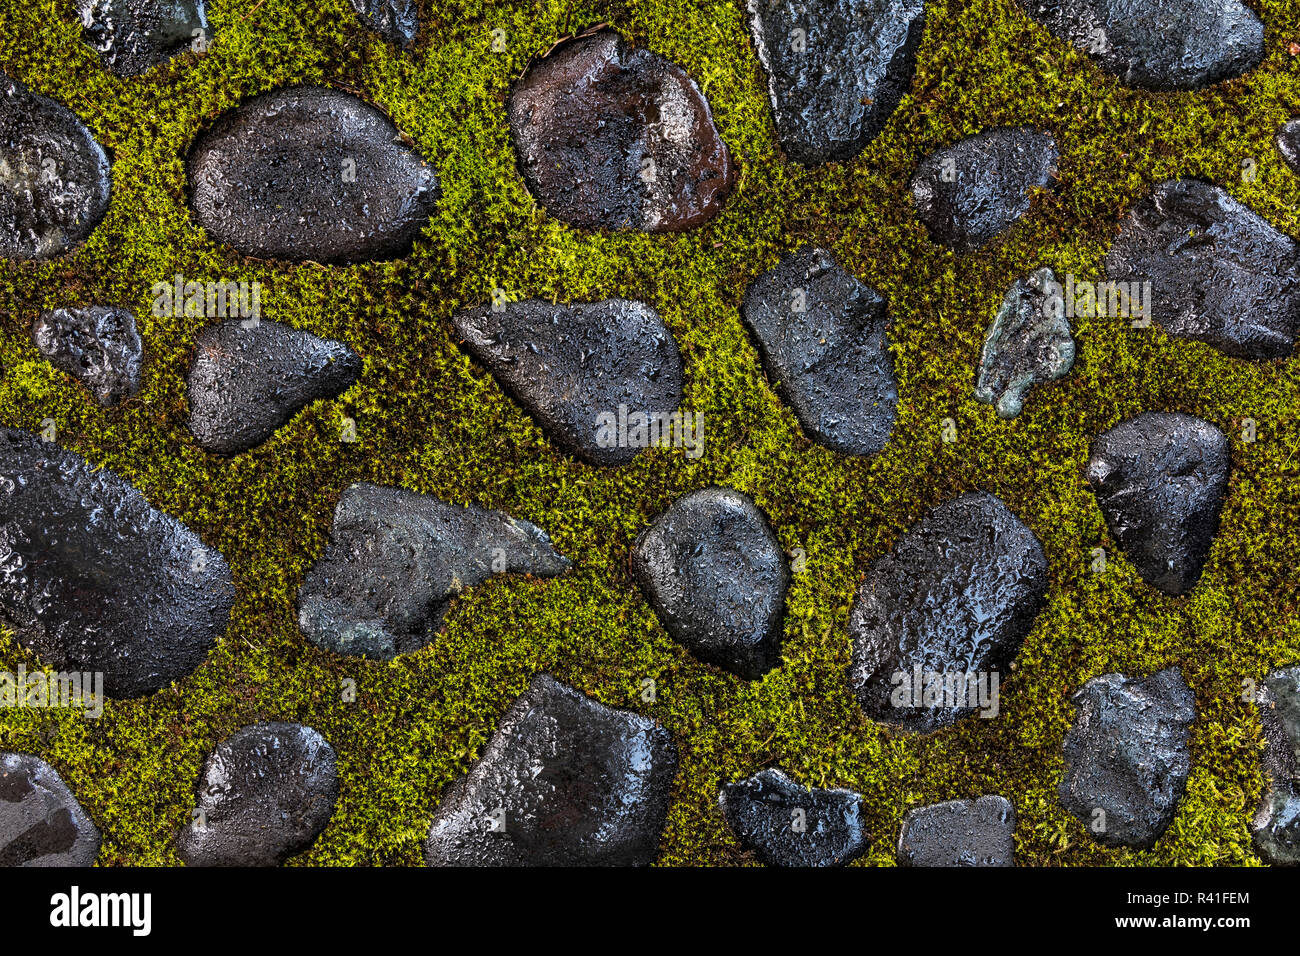 USA, Washington State, Bainbridge Island. Detail of stones and moss. Stock Photo